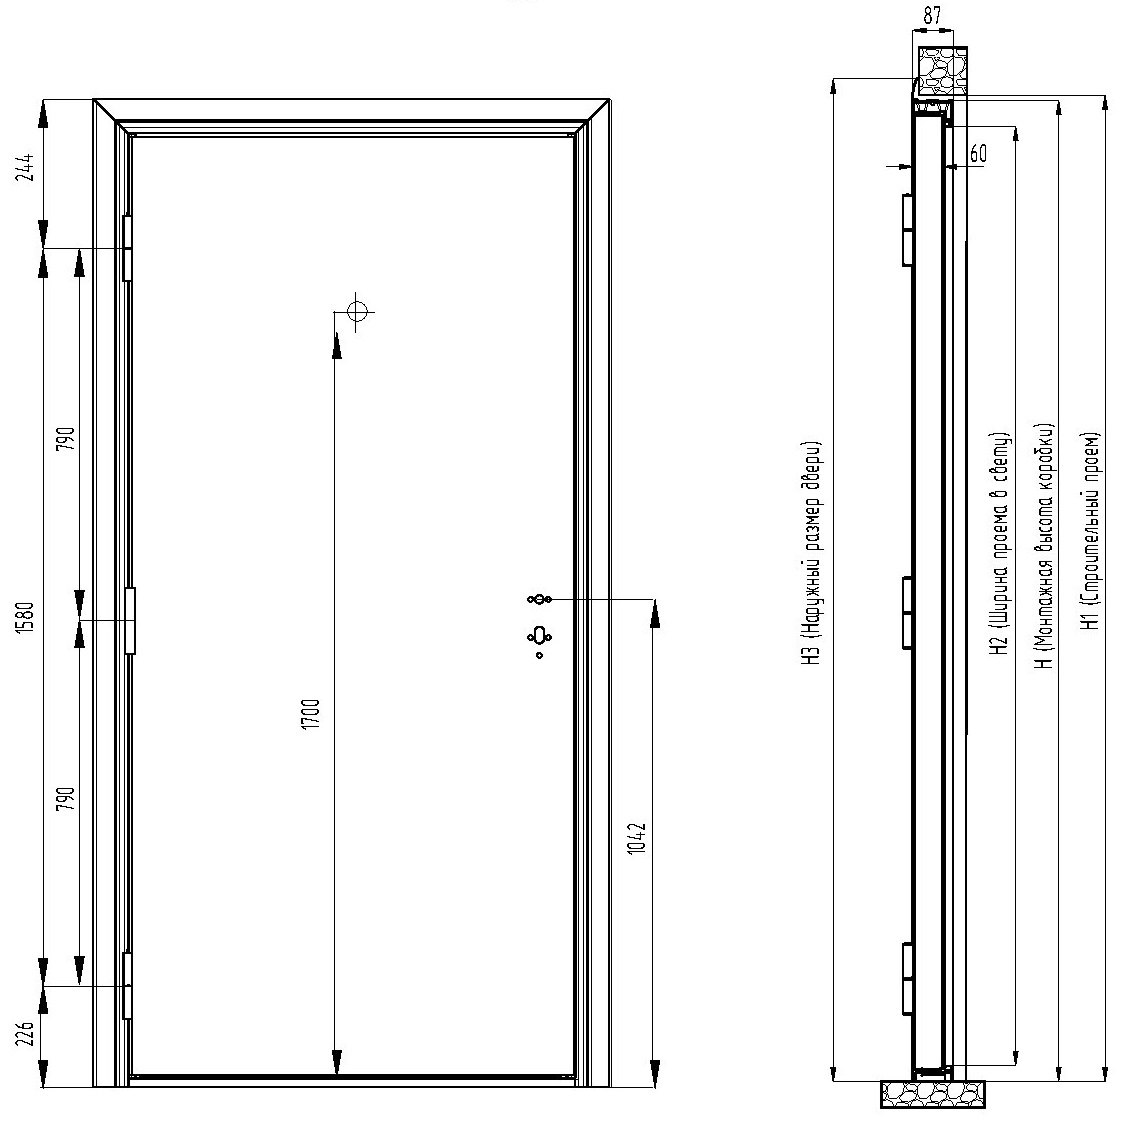 Стандартный размер двери квартиры. Стандартная ширина входной металлической двери. Дверь входная металлическая Размеры стандарт. Стандартный дверной проем входной металлической двери. Входная дверь ширина проема стандарт.